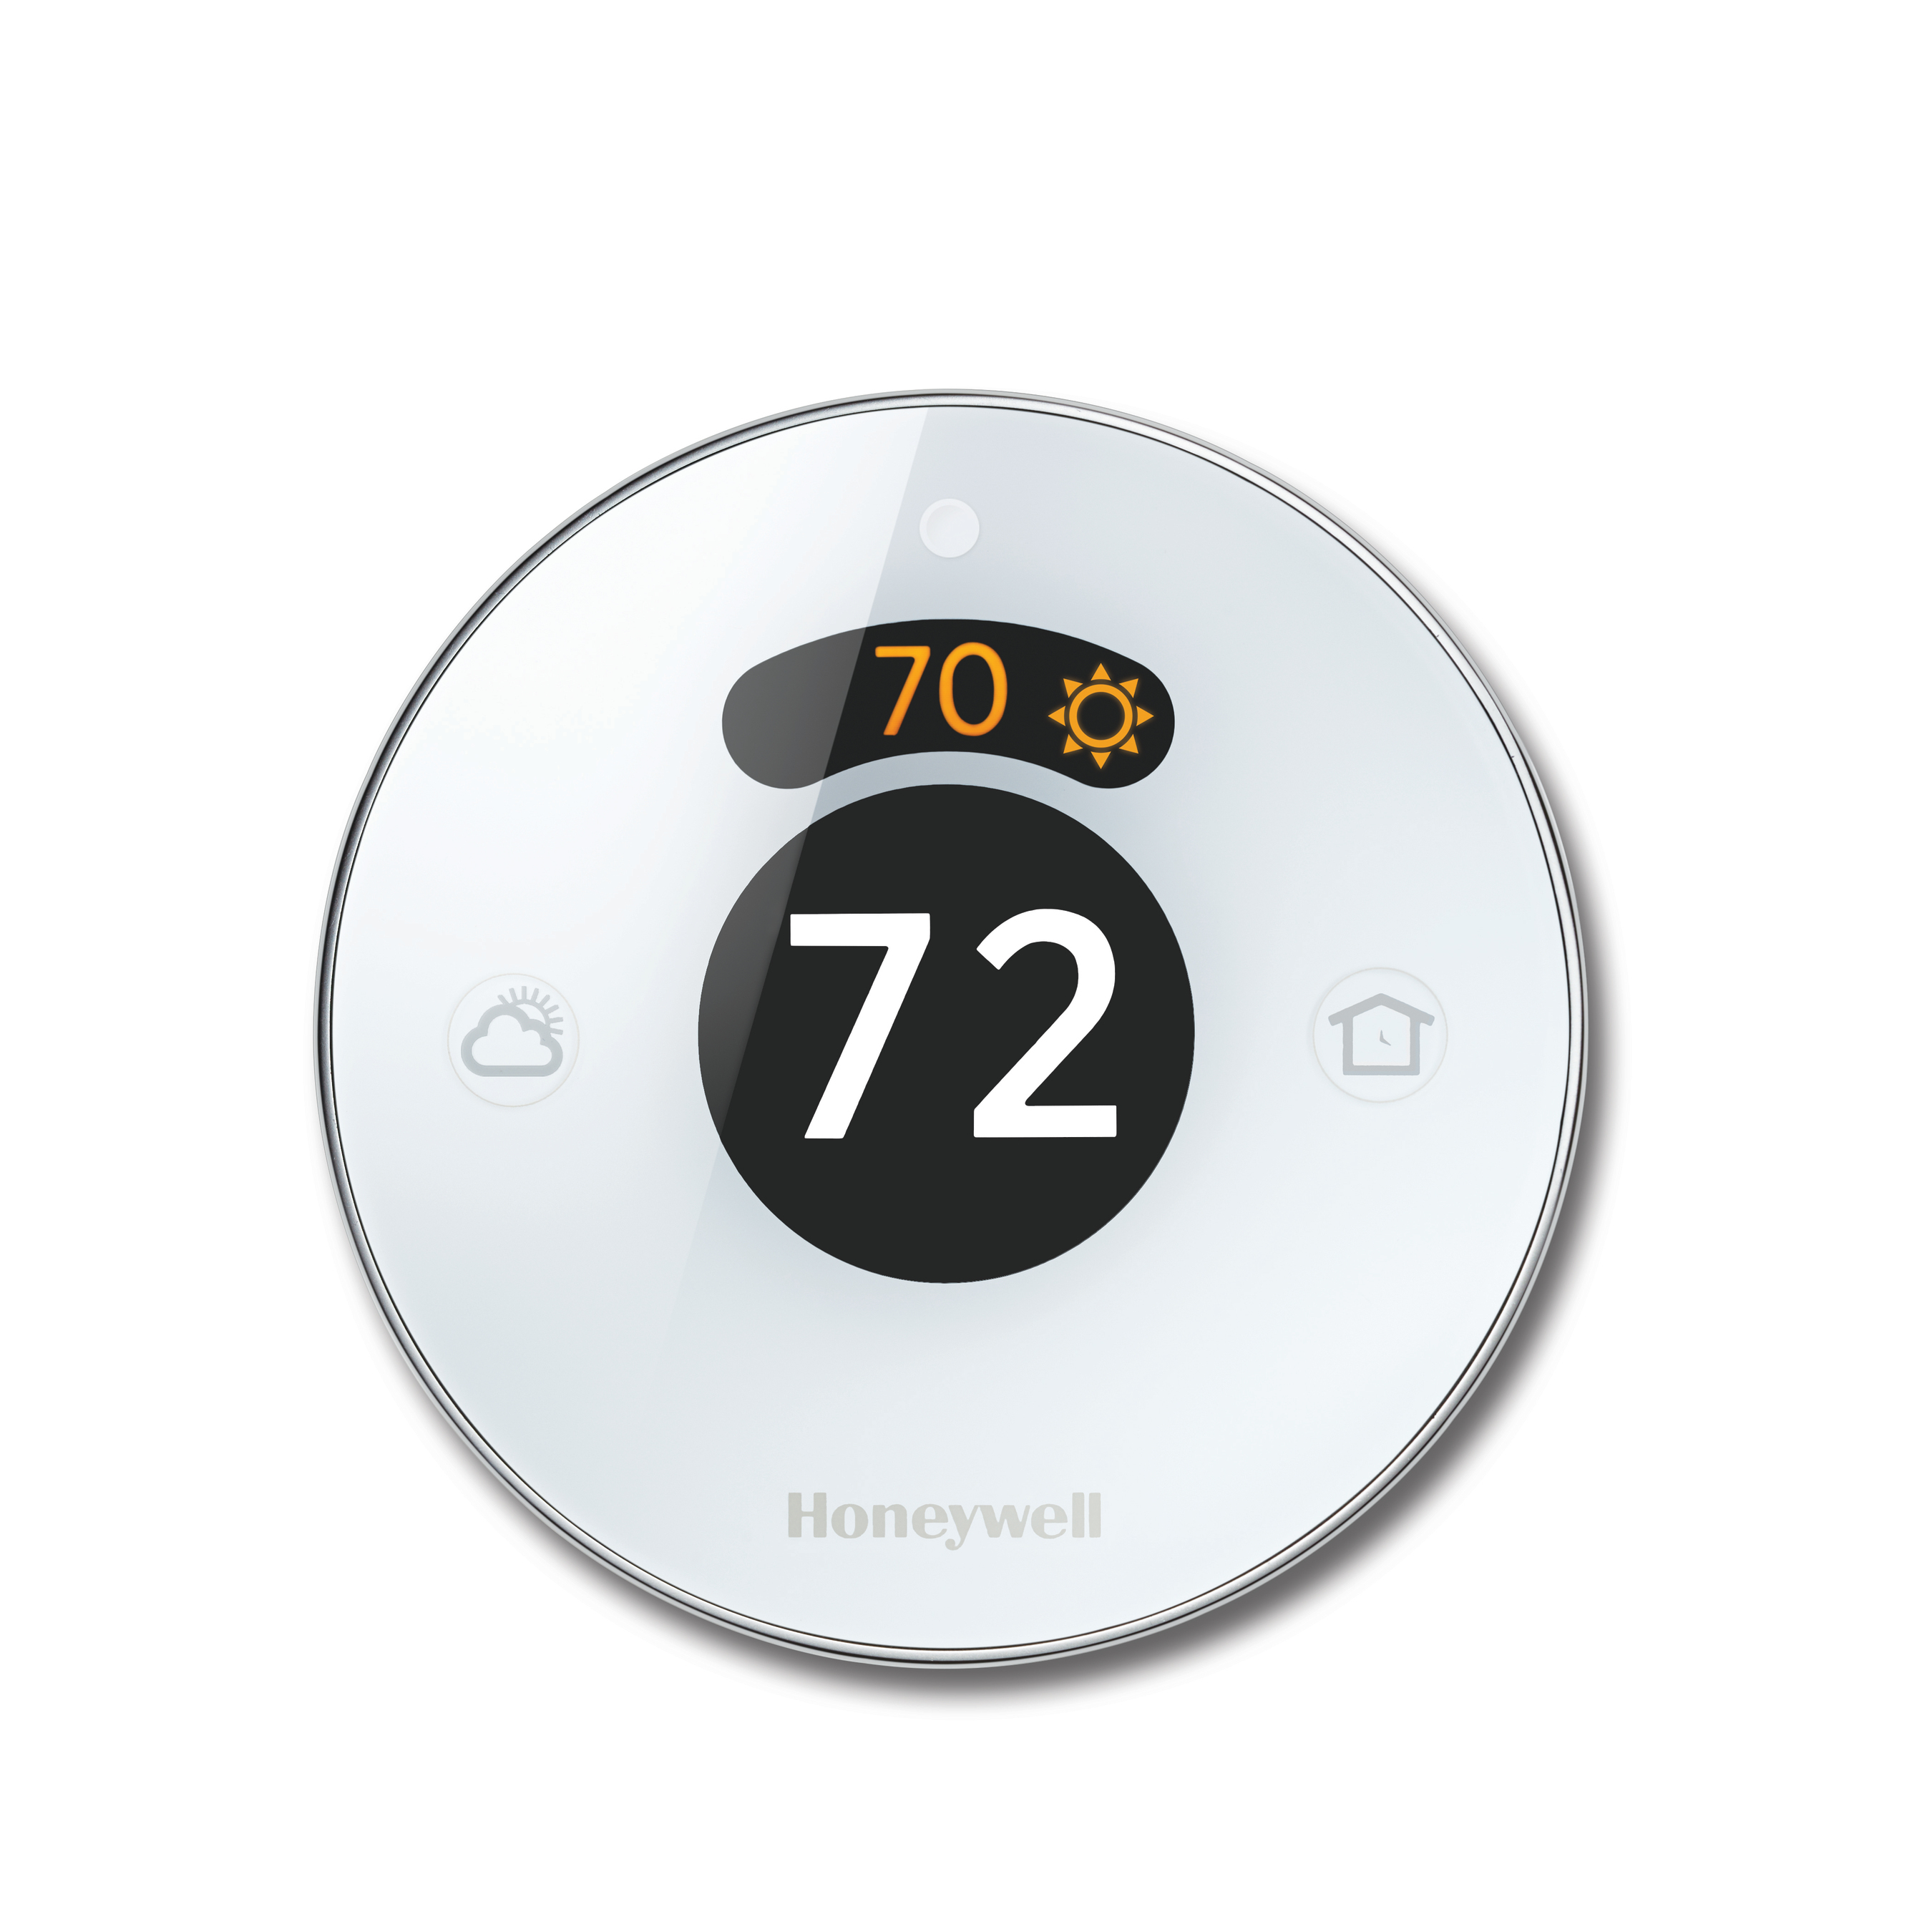 Honeywell's new, second generation Lyric Round Wi-Fi Thermostat